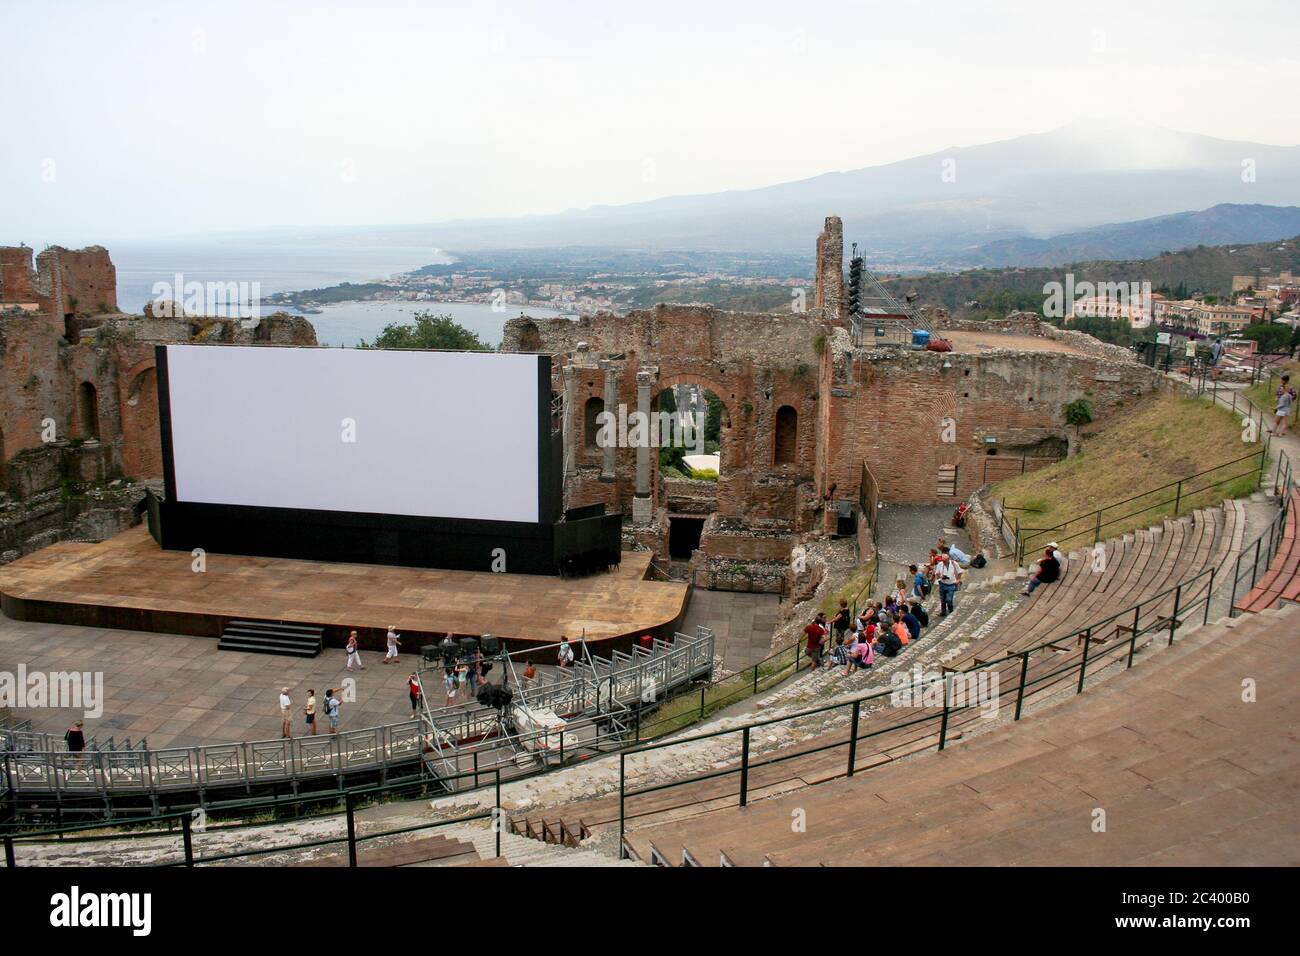 Teatro Antico di Taormina, where the Taormina International Film Festival is held. (Sicily / Italy) Stock Photo